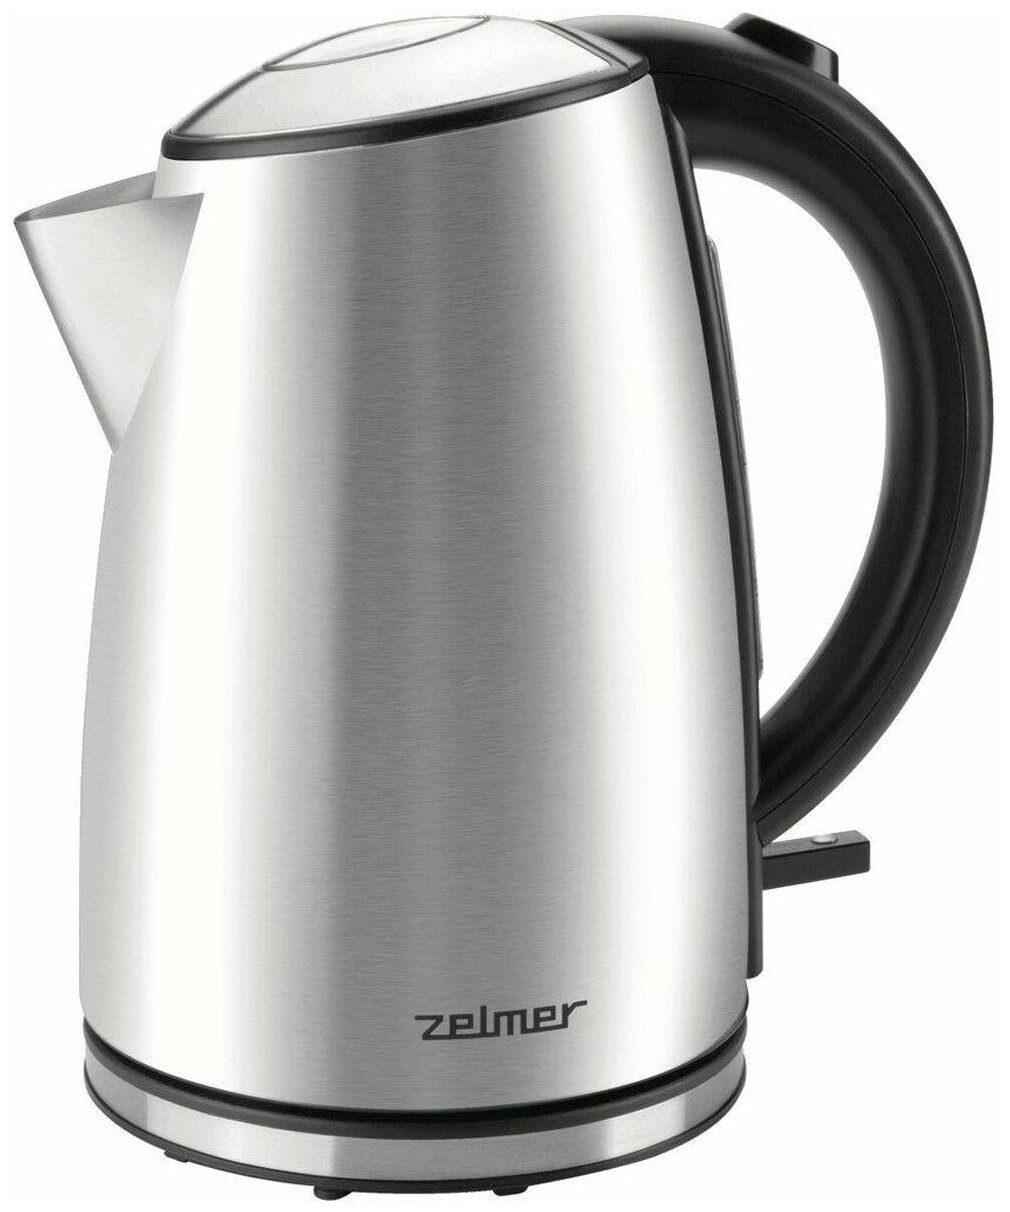 Чайник Zelmer "ZCK1274 INOX", электрический, серебристый